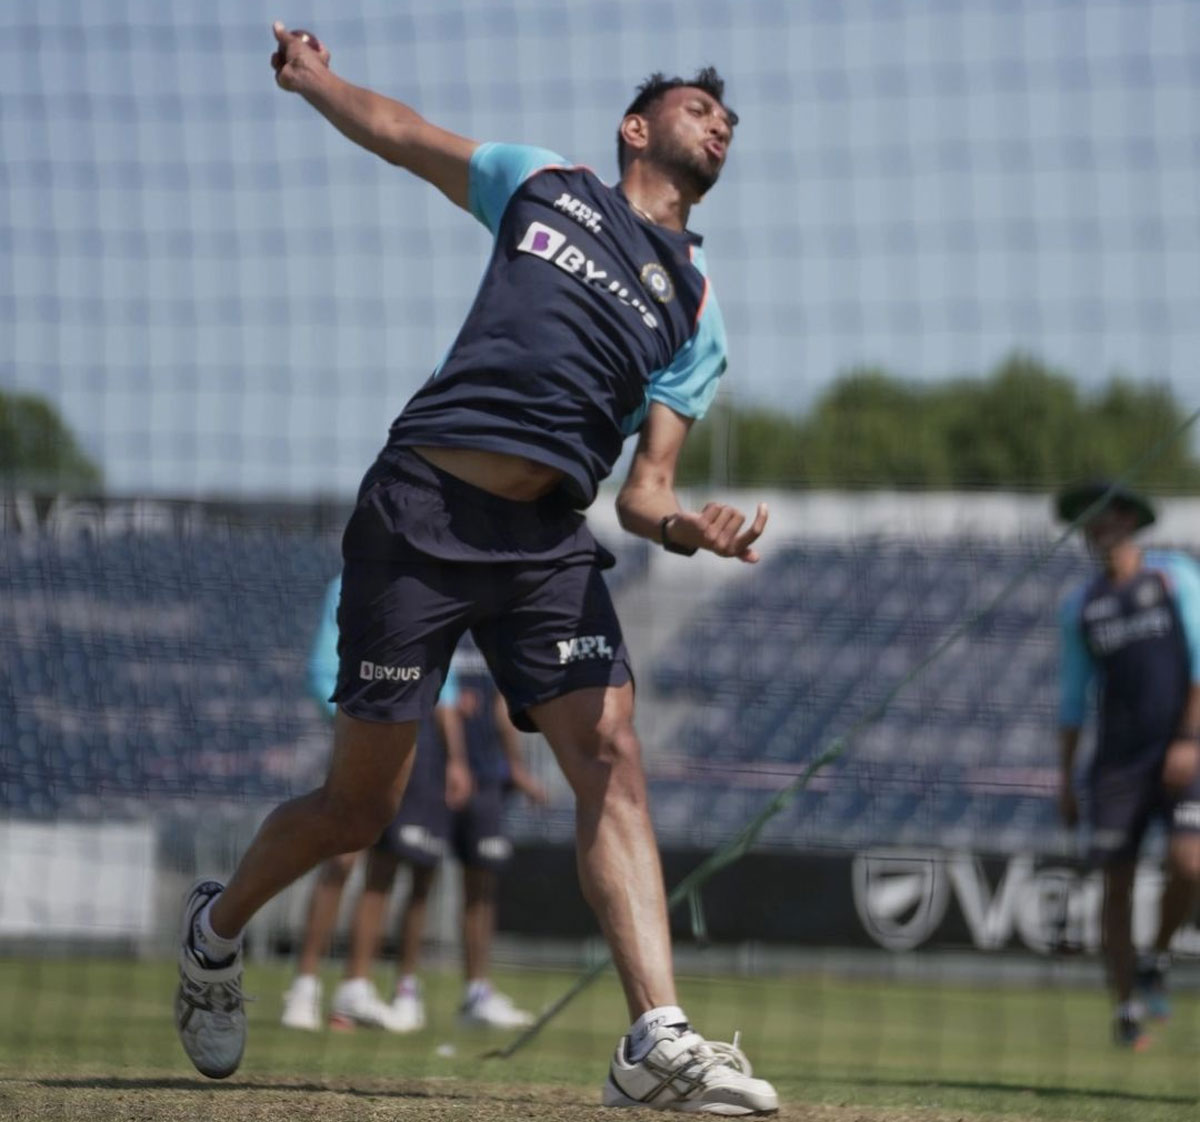 Prasidh injured in Ranji: Will he miss England series?